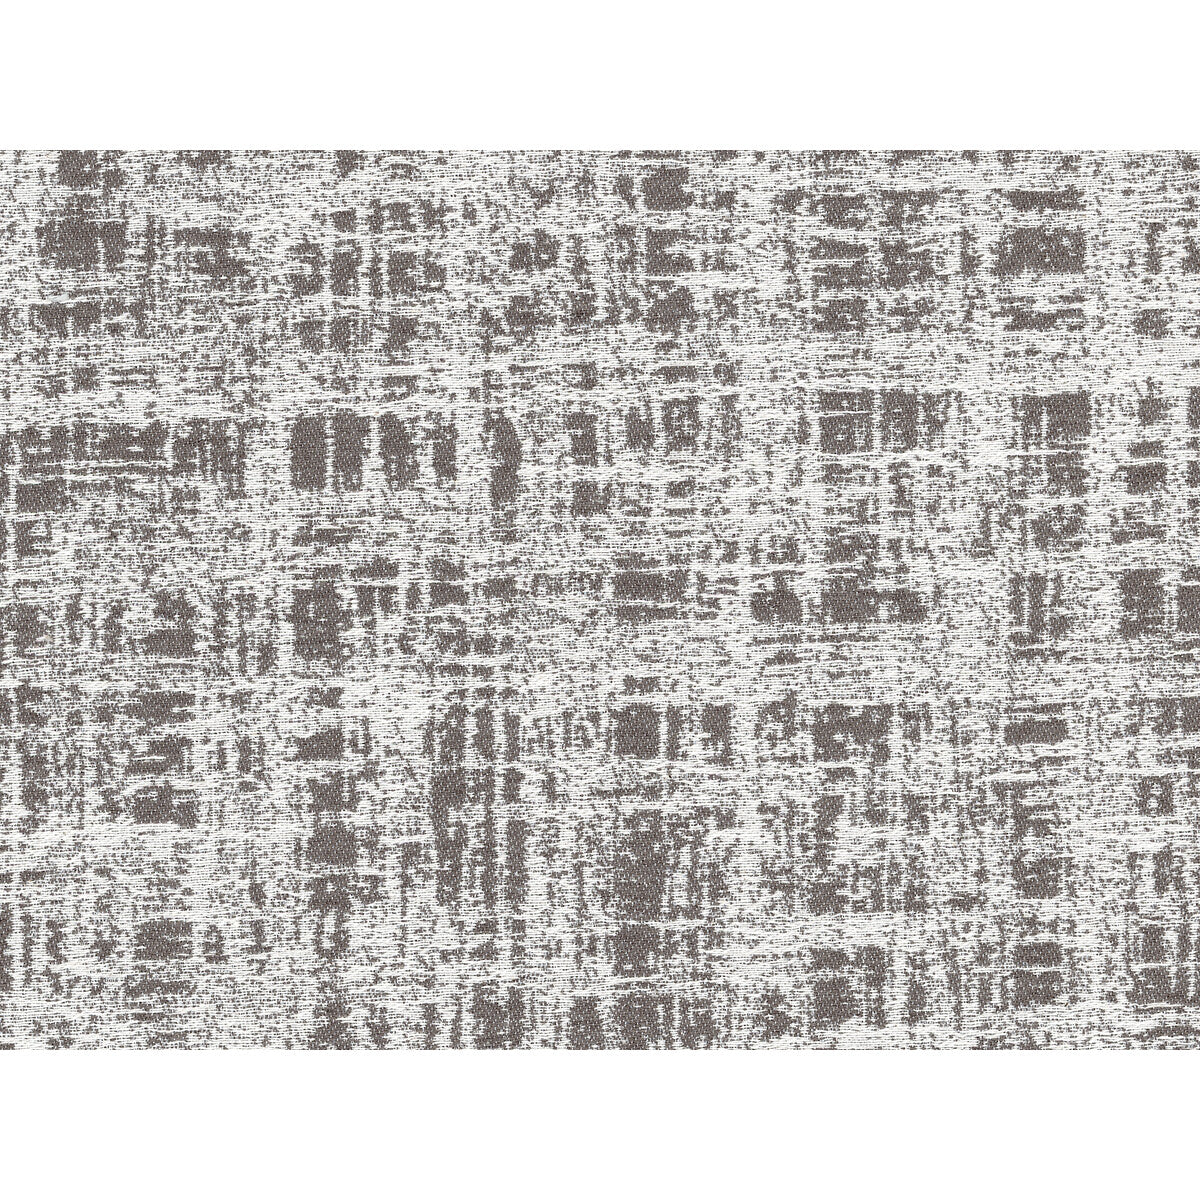 Transmit fabric in granite color - pattern 34606.1611.0 - by Kravet Design